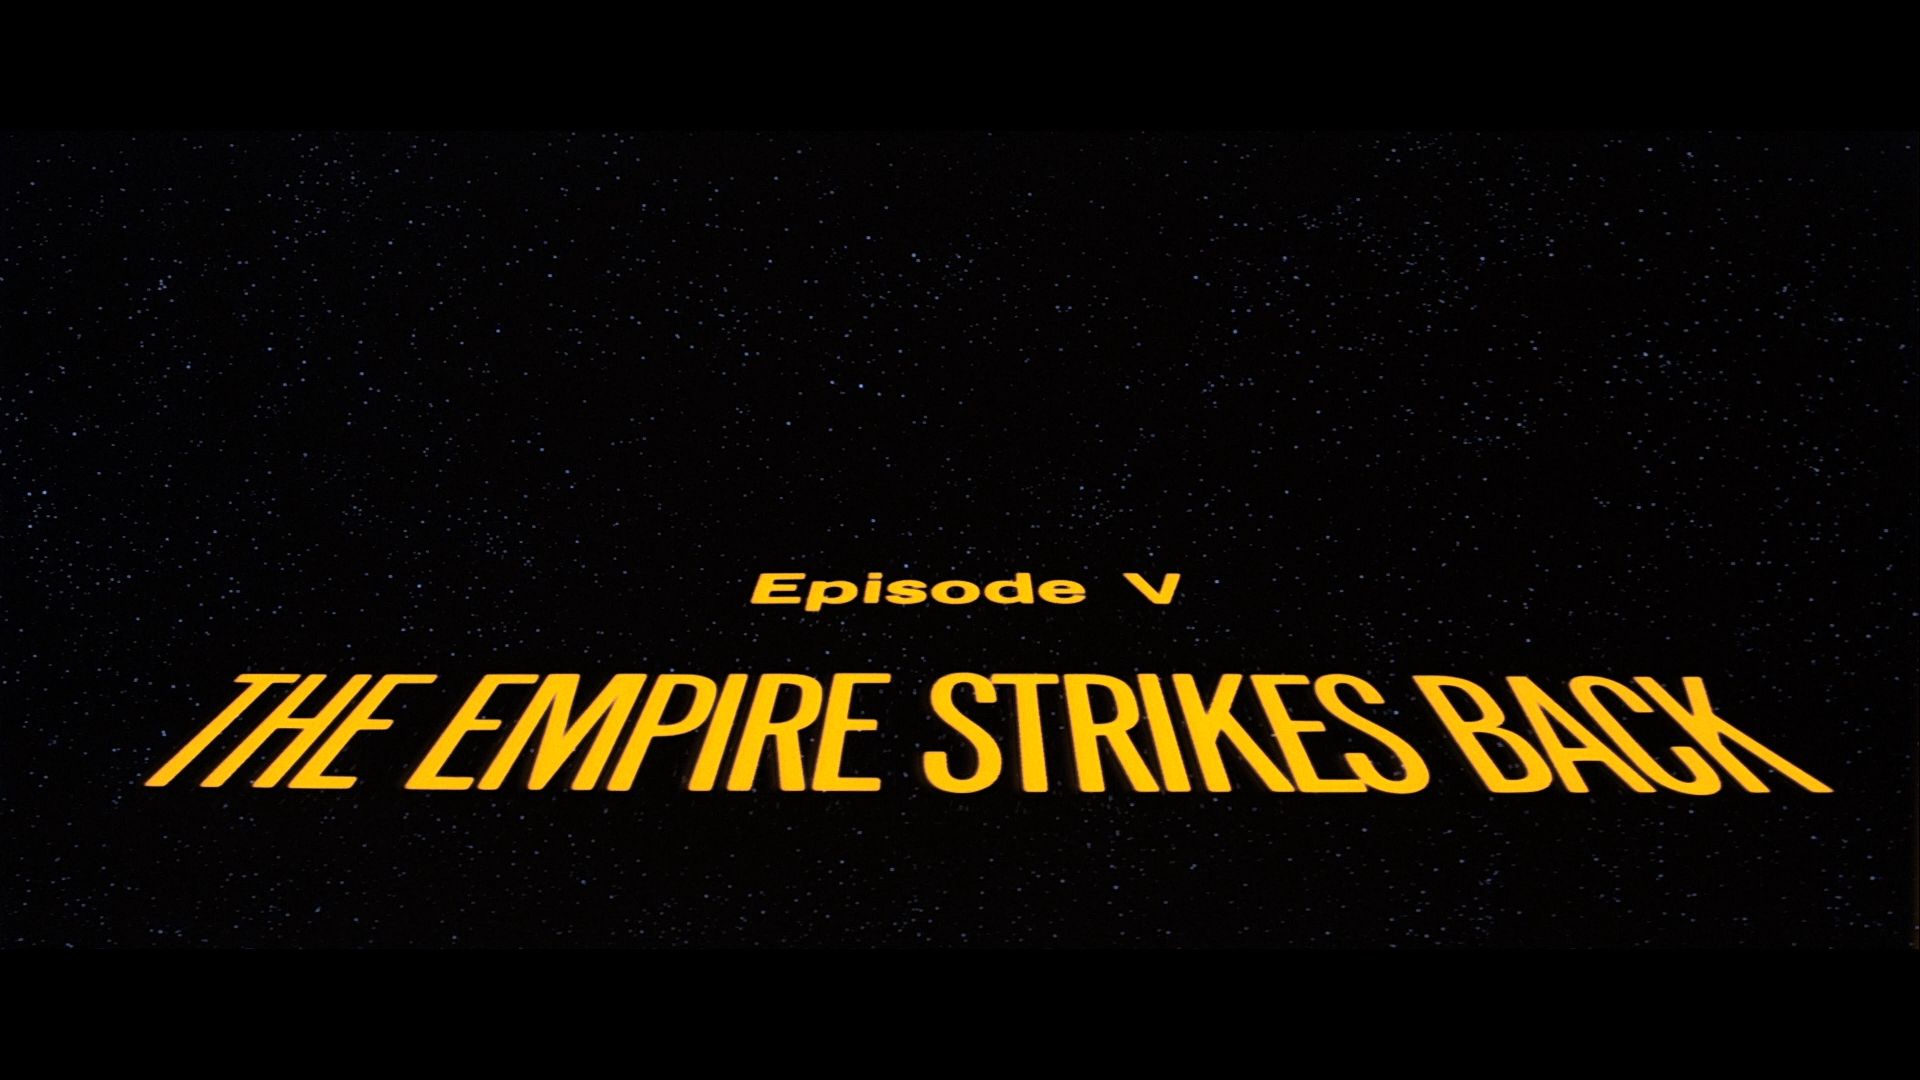 Download mobile wallpaper Star Wars Episode V: The Empire Strikes Back, Star Wars, Movie for free.